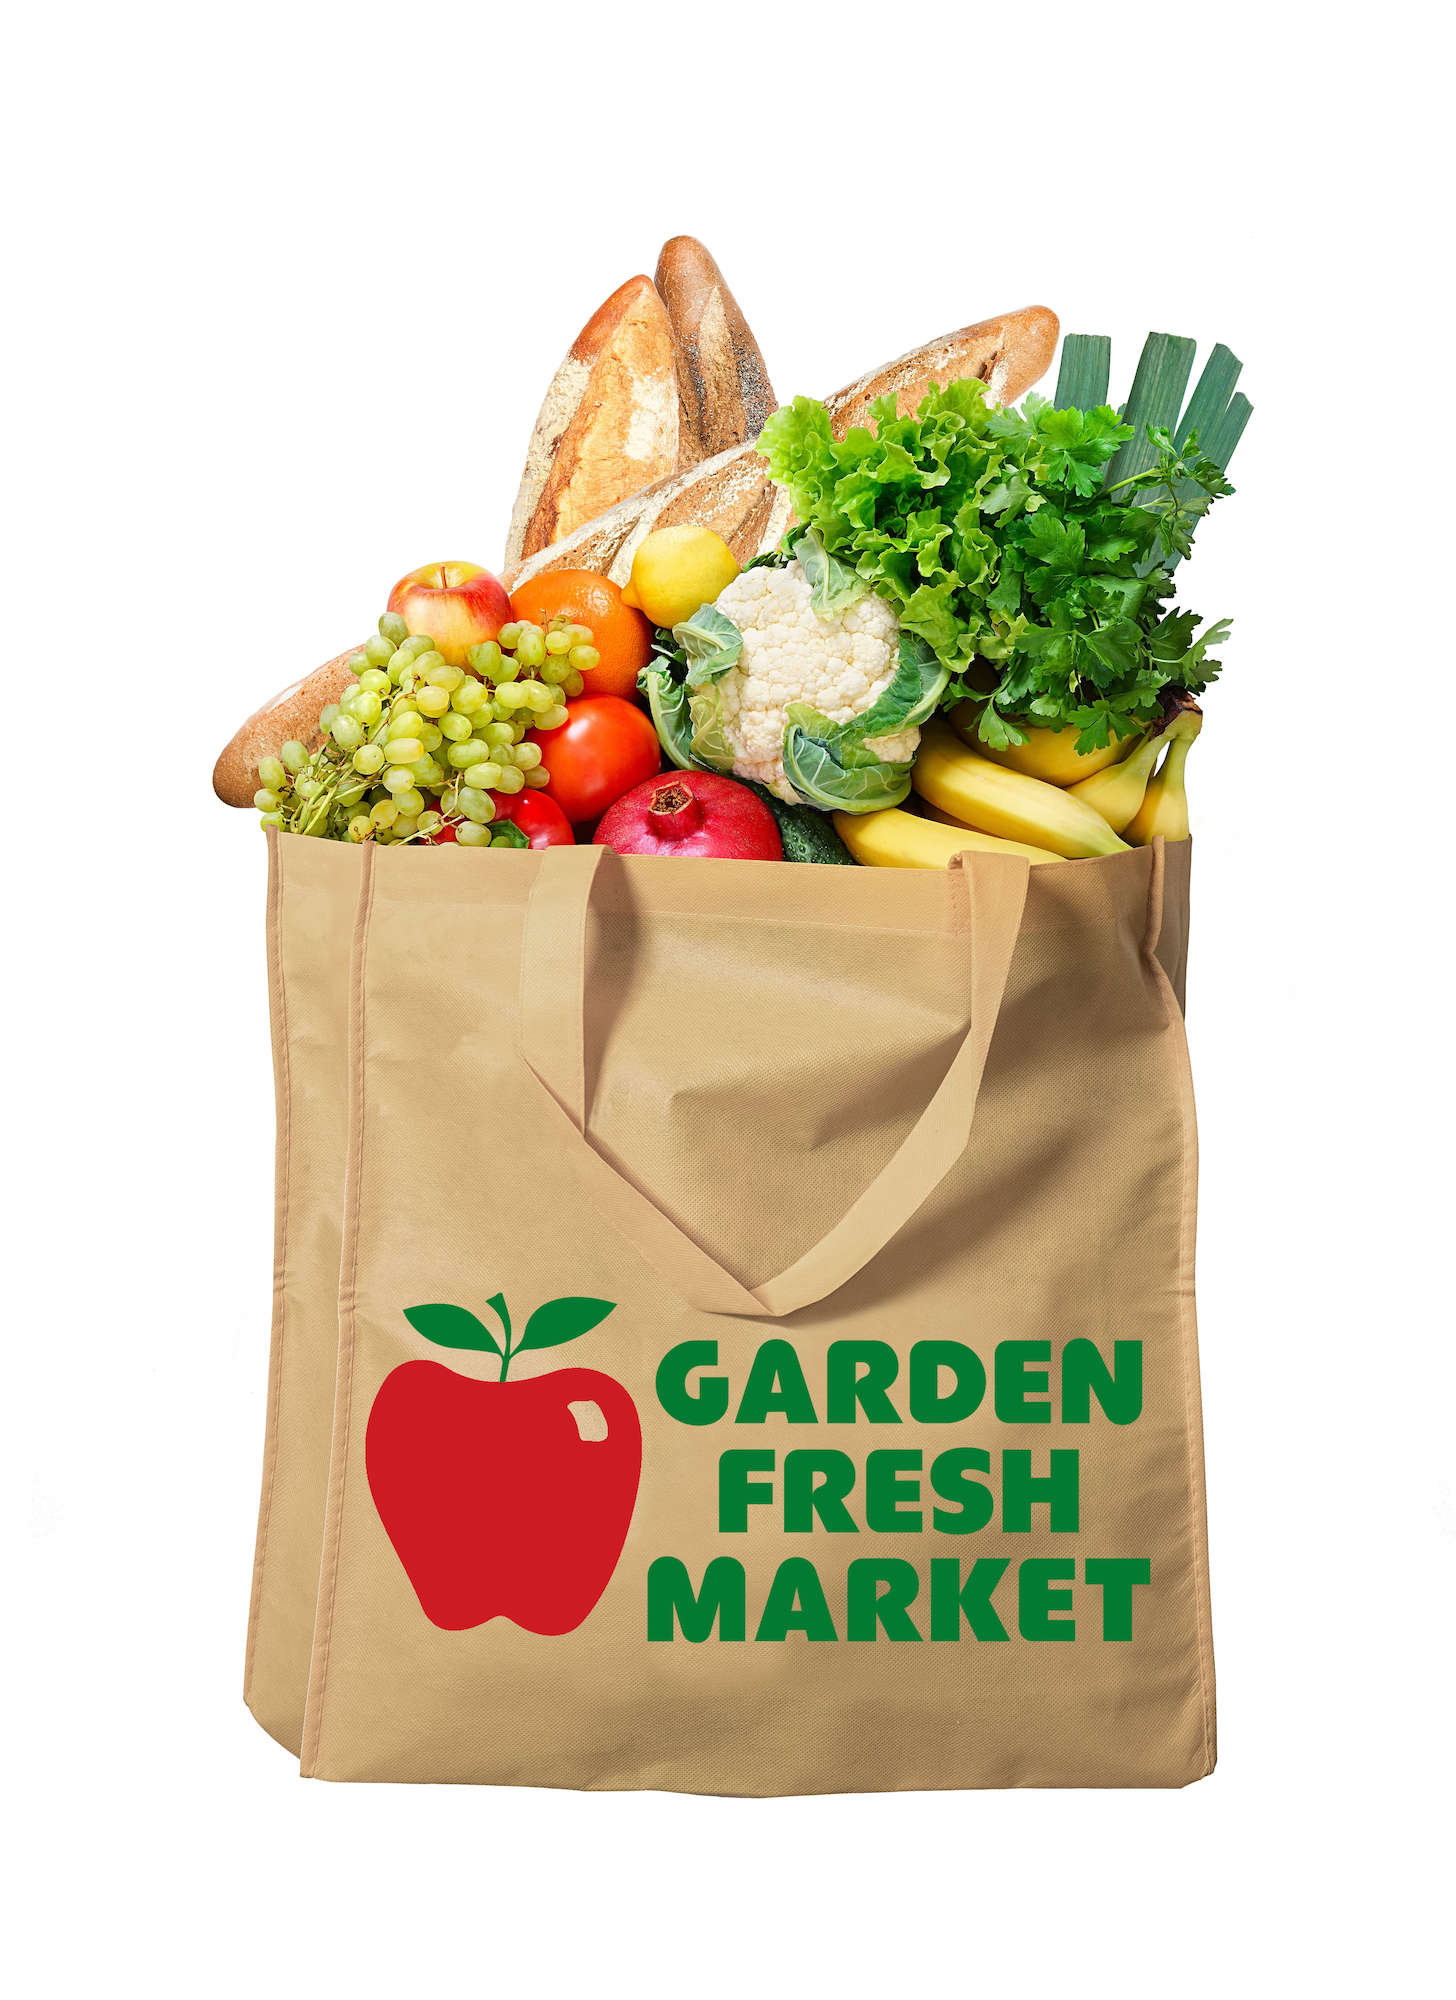 Garden Fresh Market - Online Ordering, Grocery Delivery!